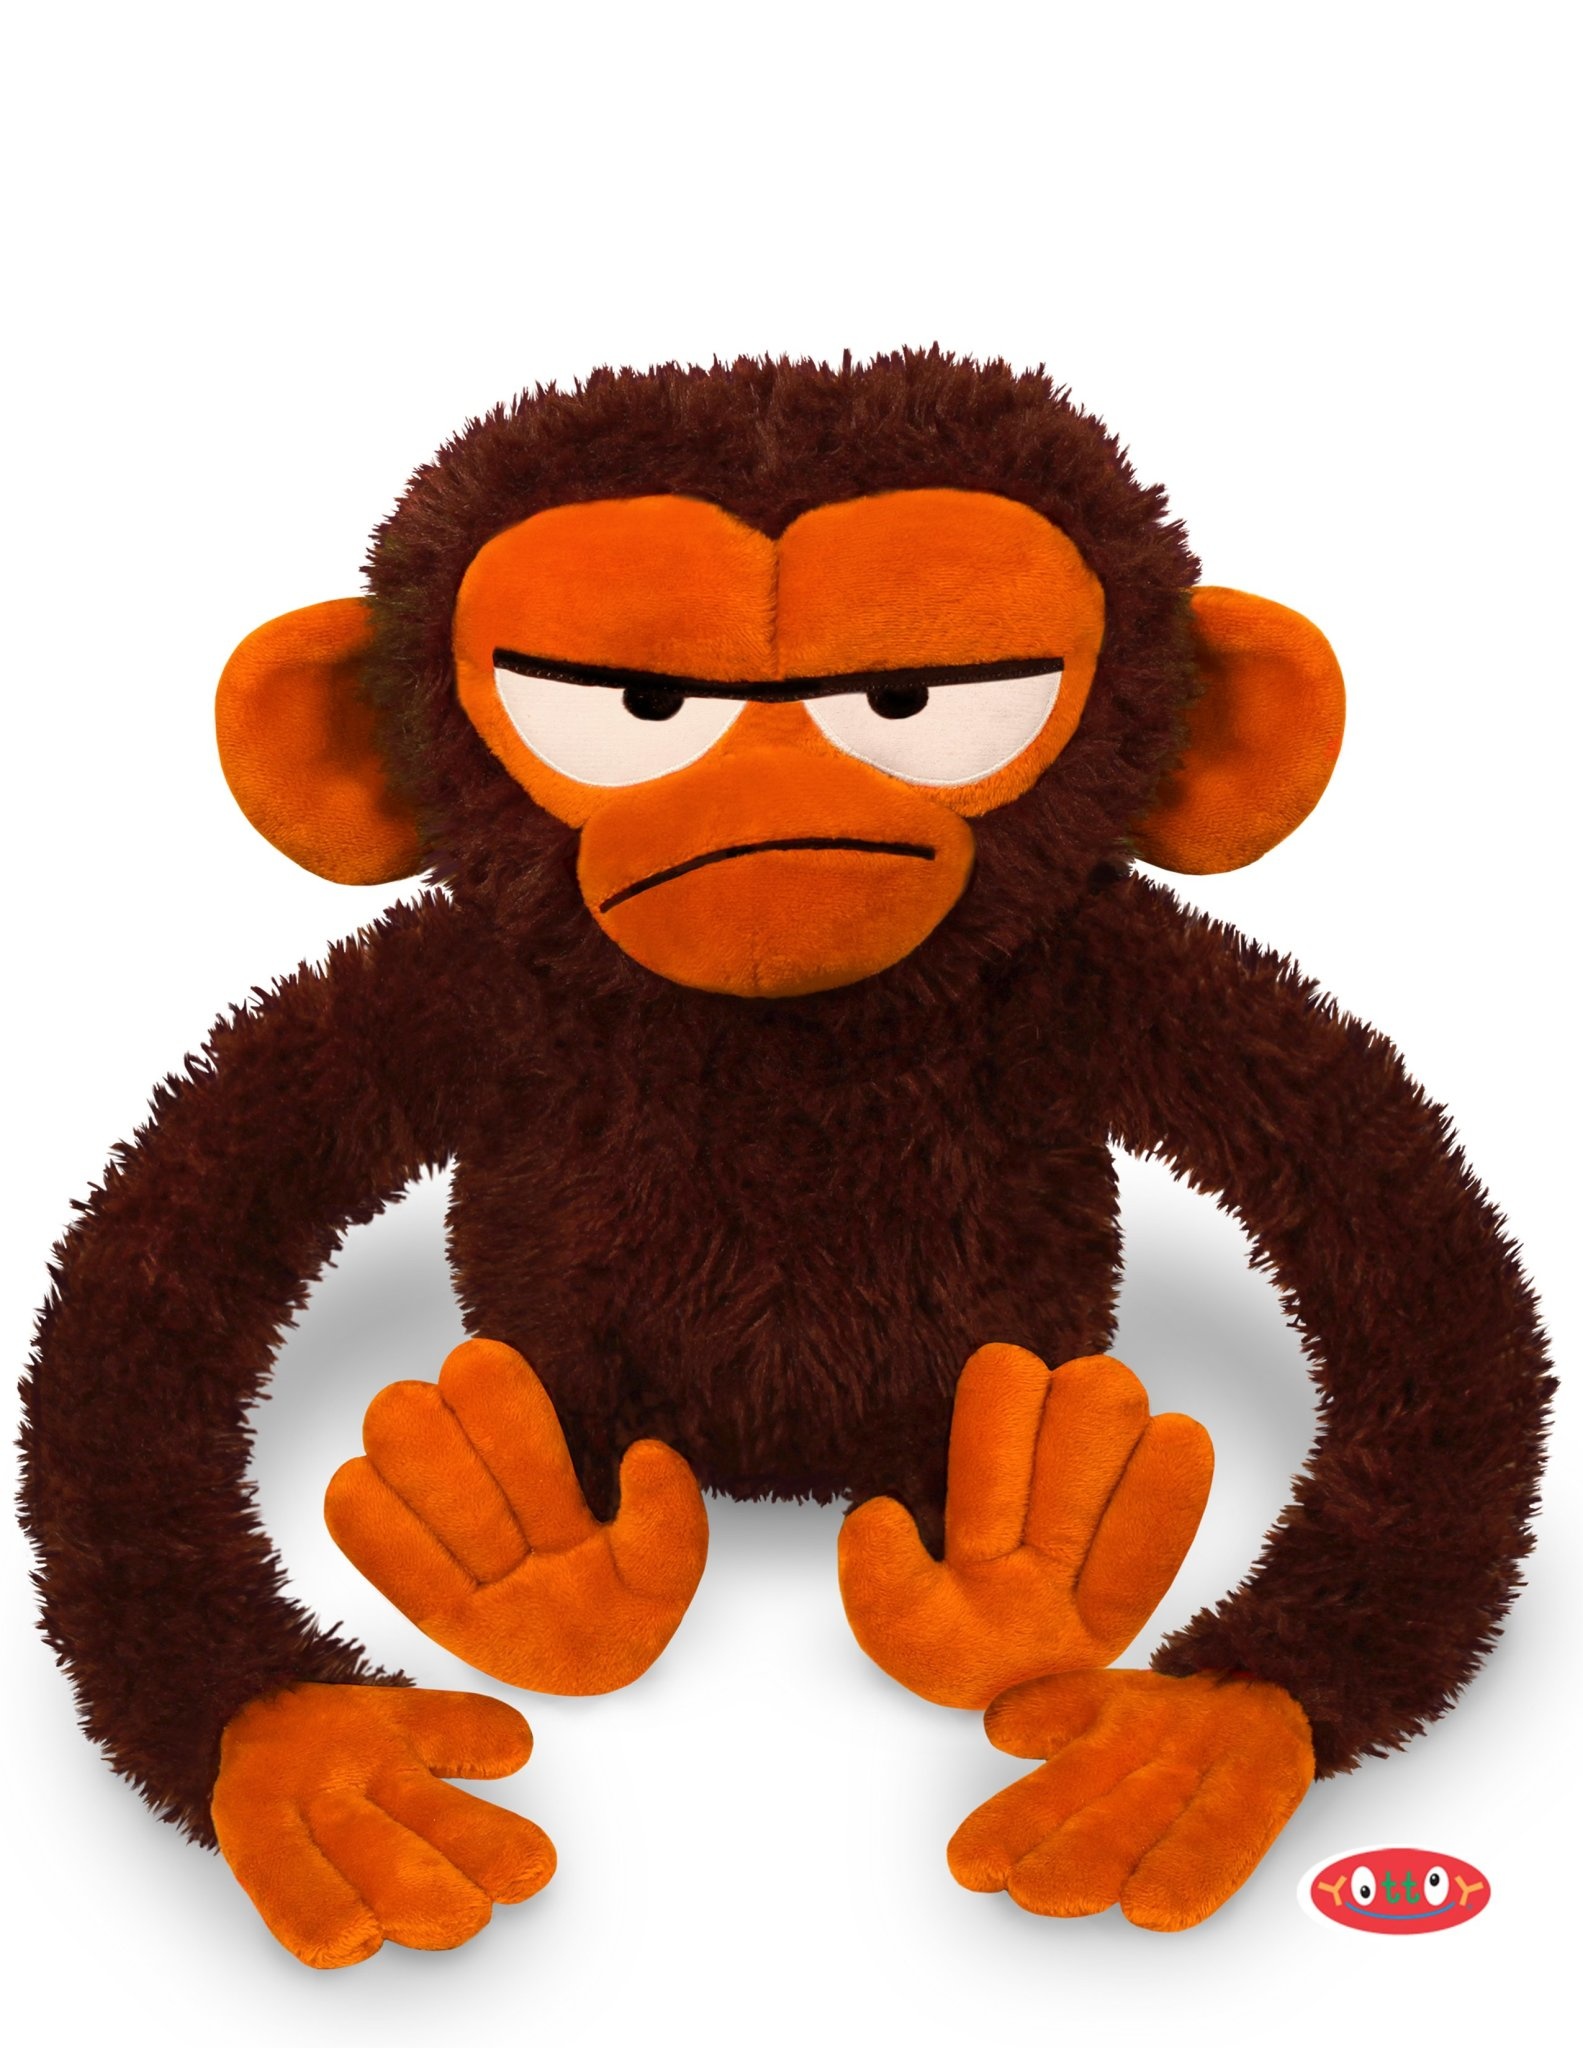 Grumpy Monkey (Plush Toy)